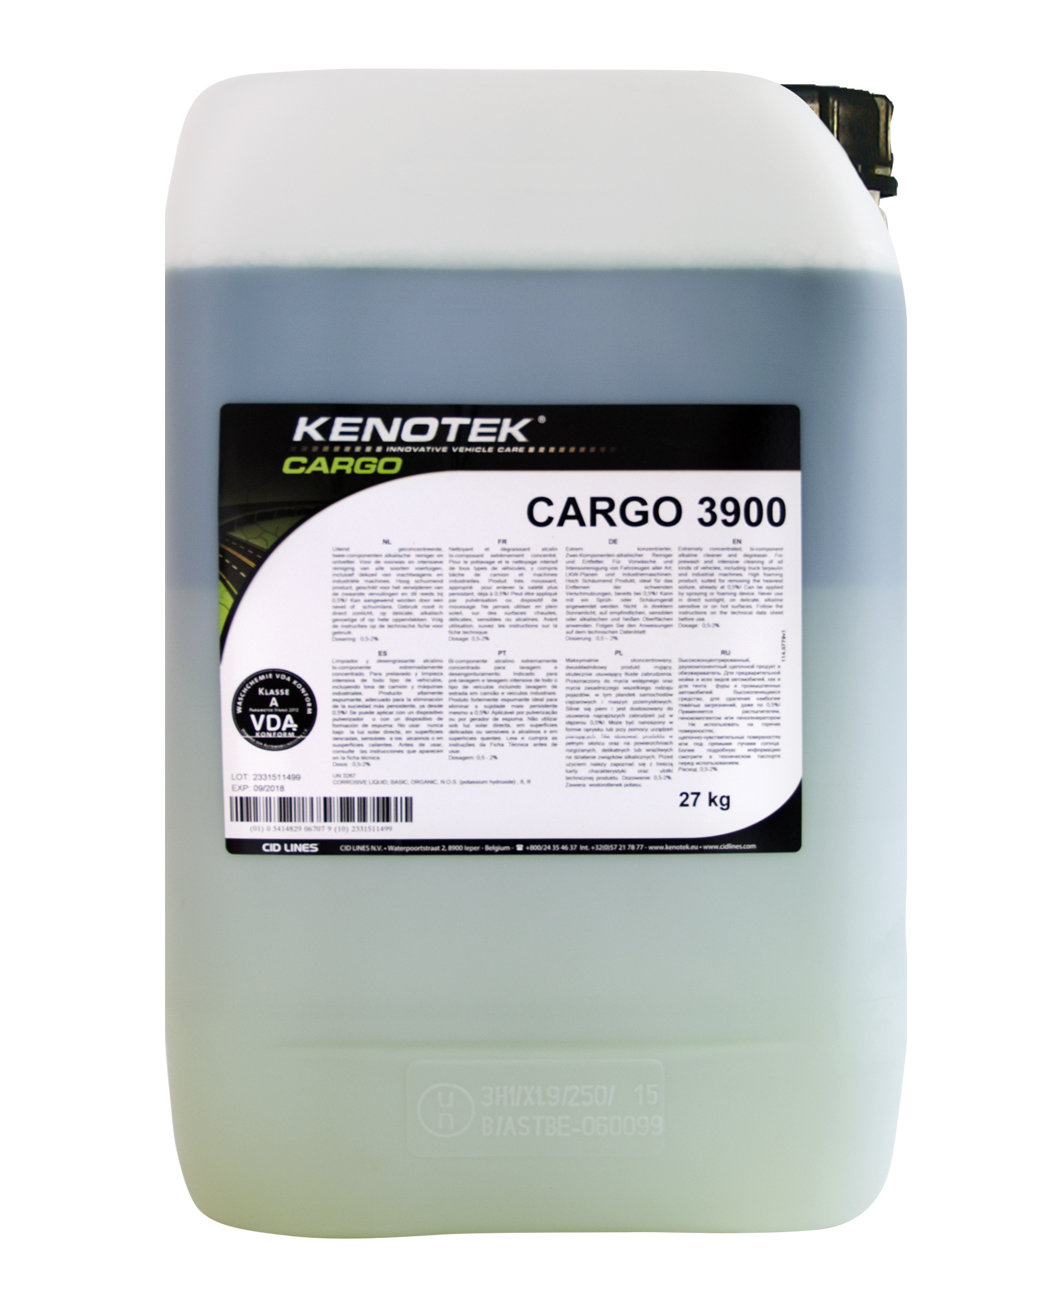 Kenotek CARGO 3900, inhoud: 10 kg